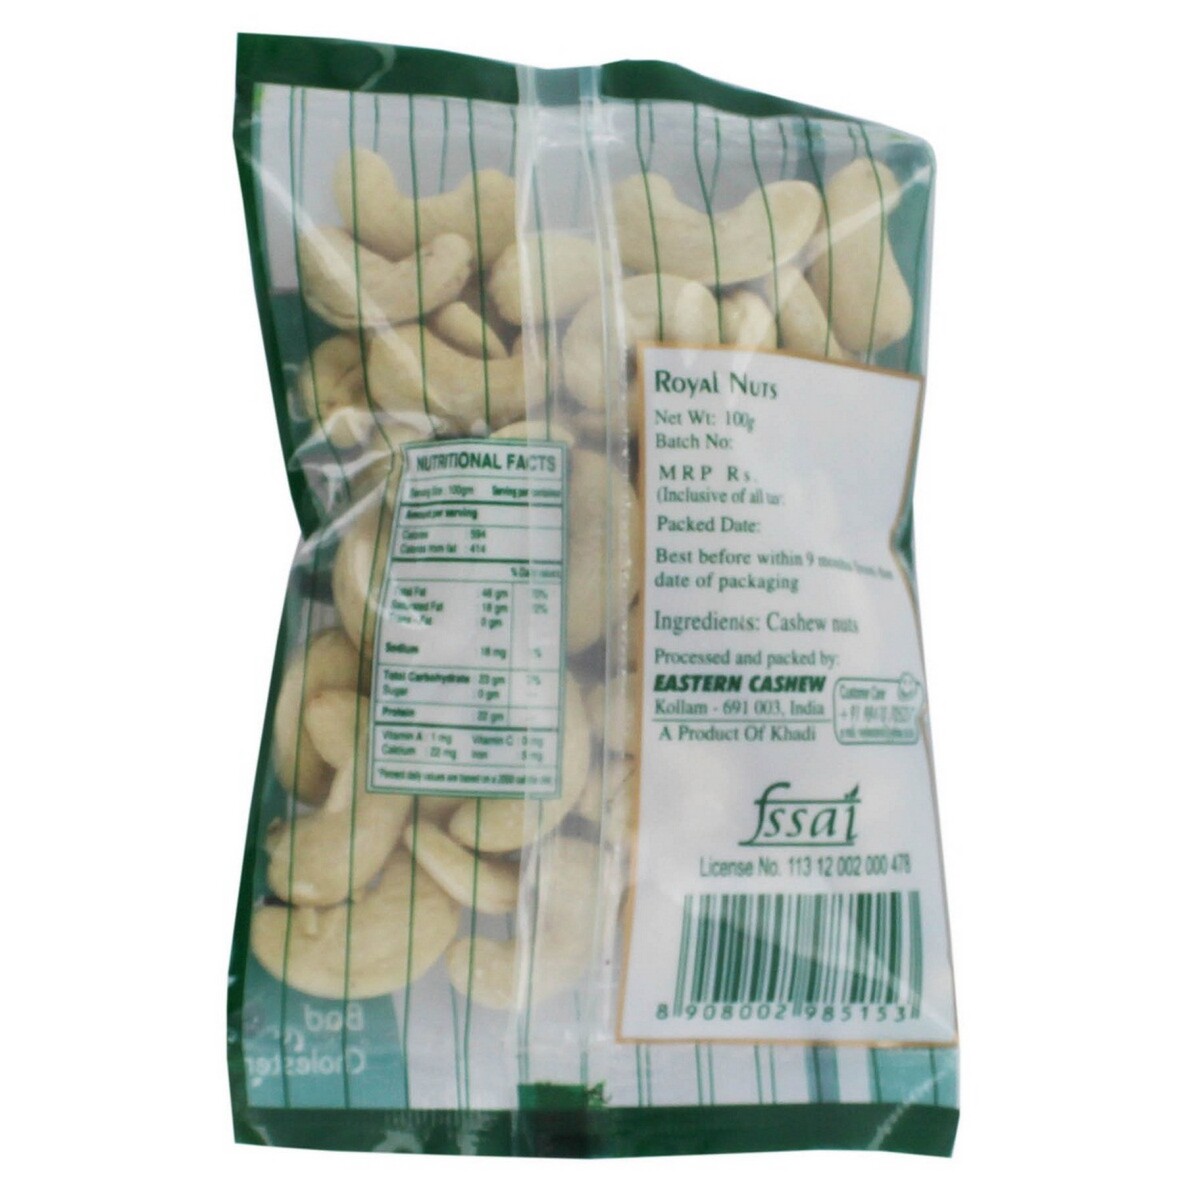 Royal Nut Plain Cashew W 240 100g